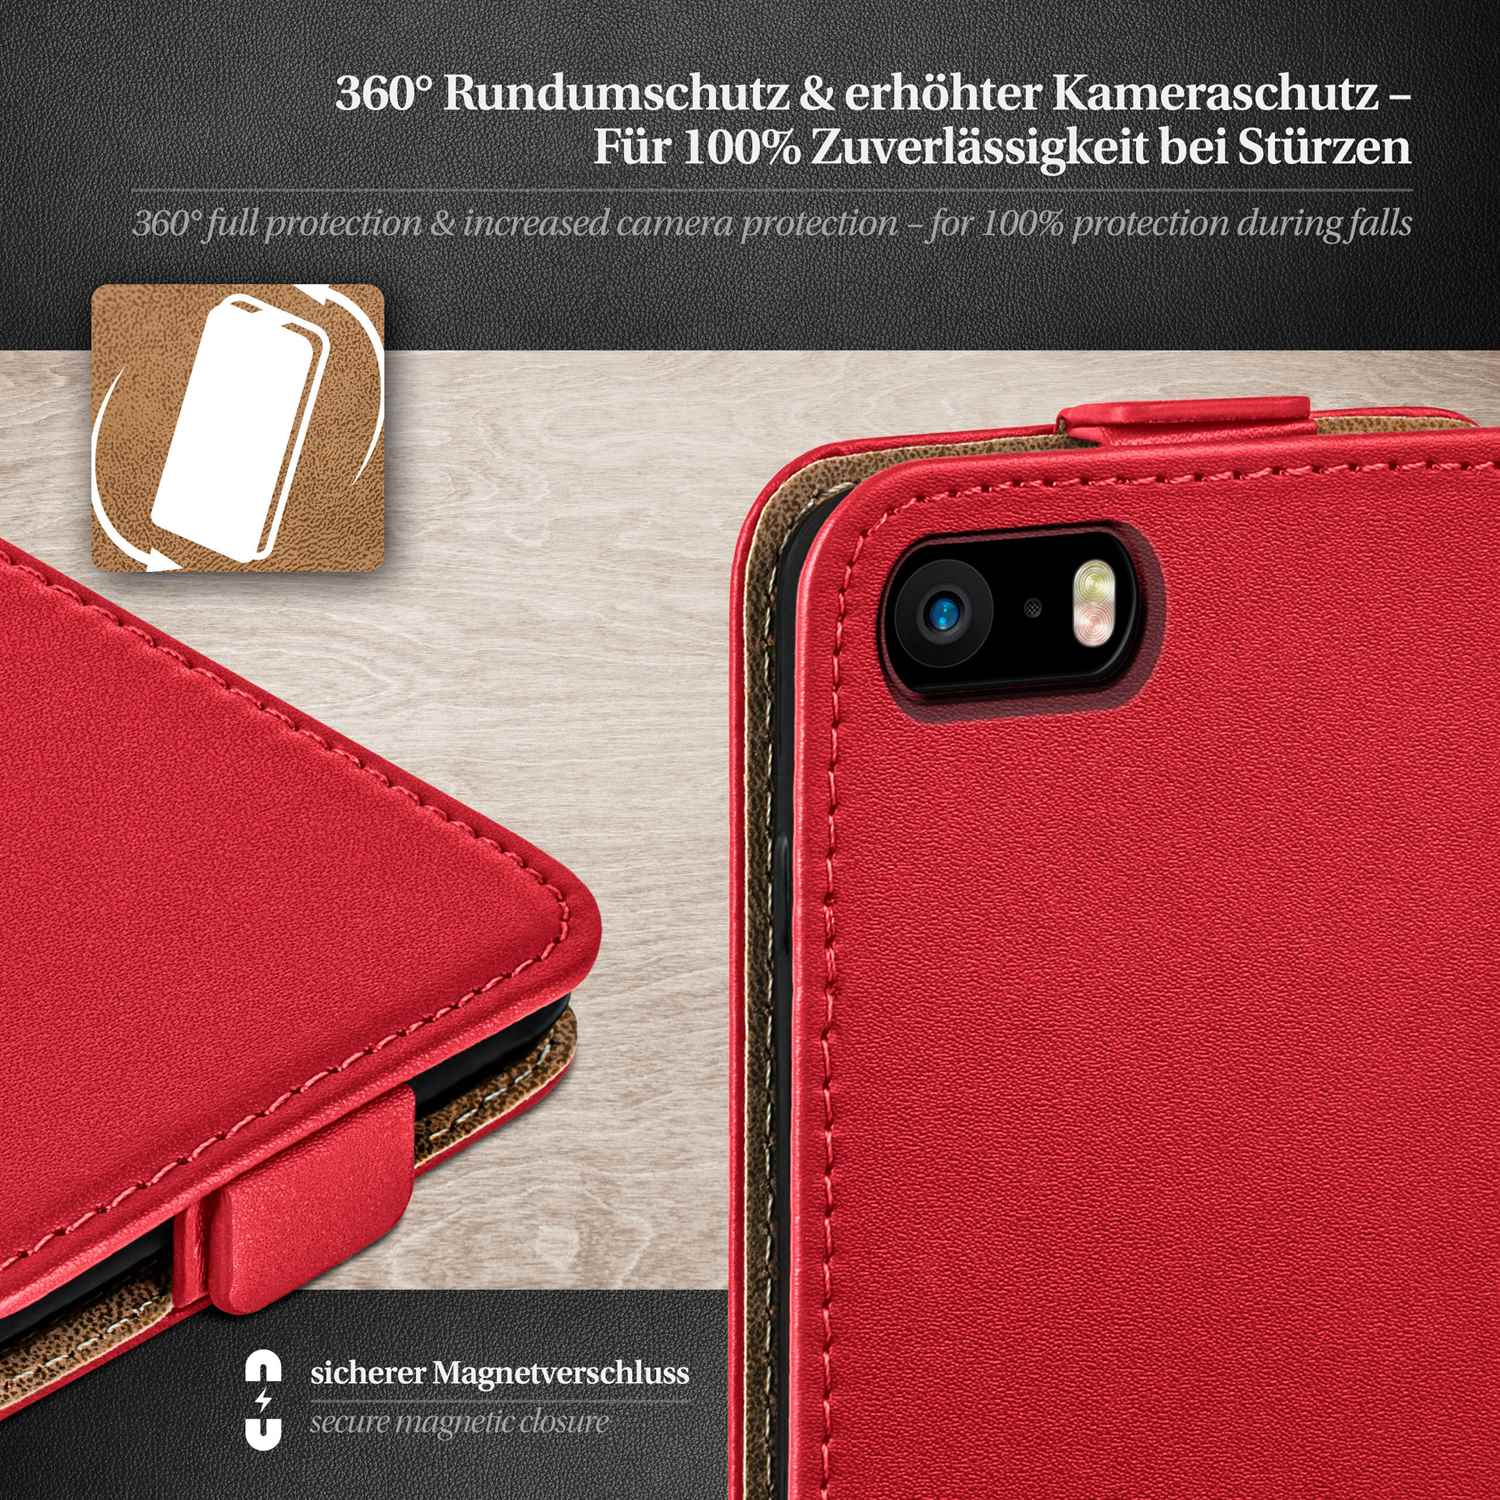 MOEX Flip Case, Flip Cover, iPhone 5s, Blazing-Red Apple